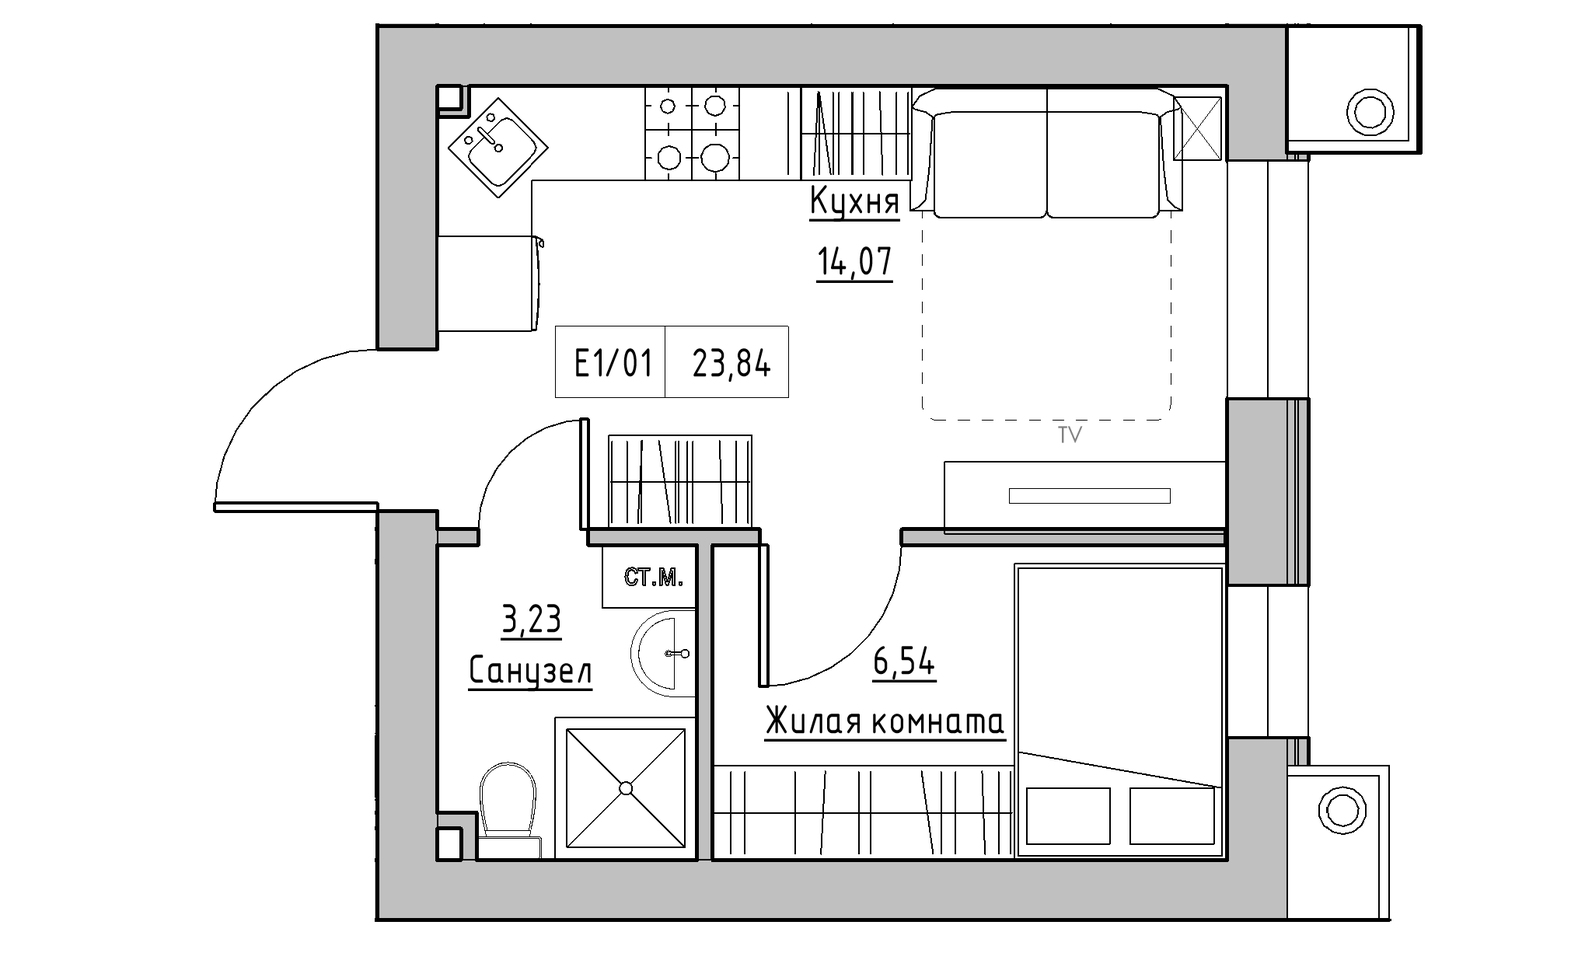 Planning 1-rm flats area 23.84m2, KS-014-05/0014.